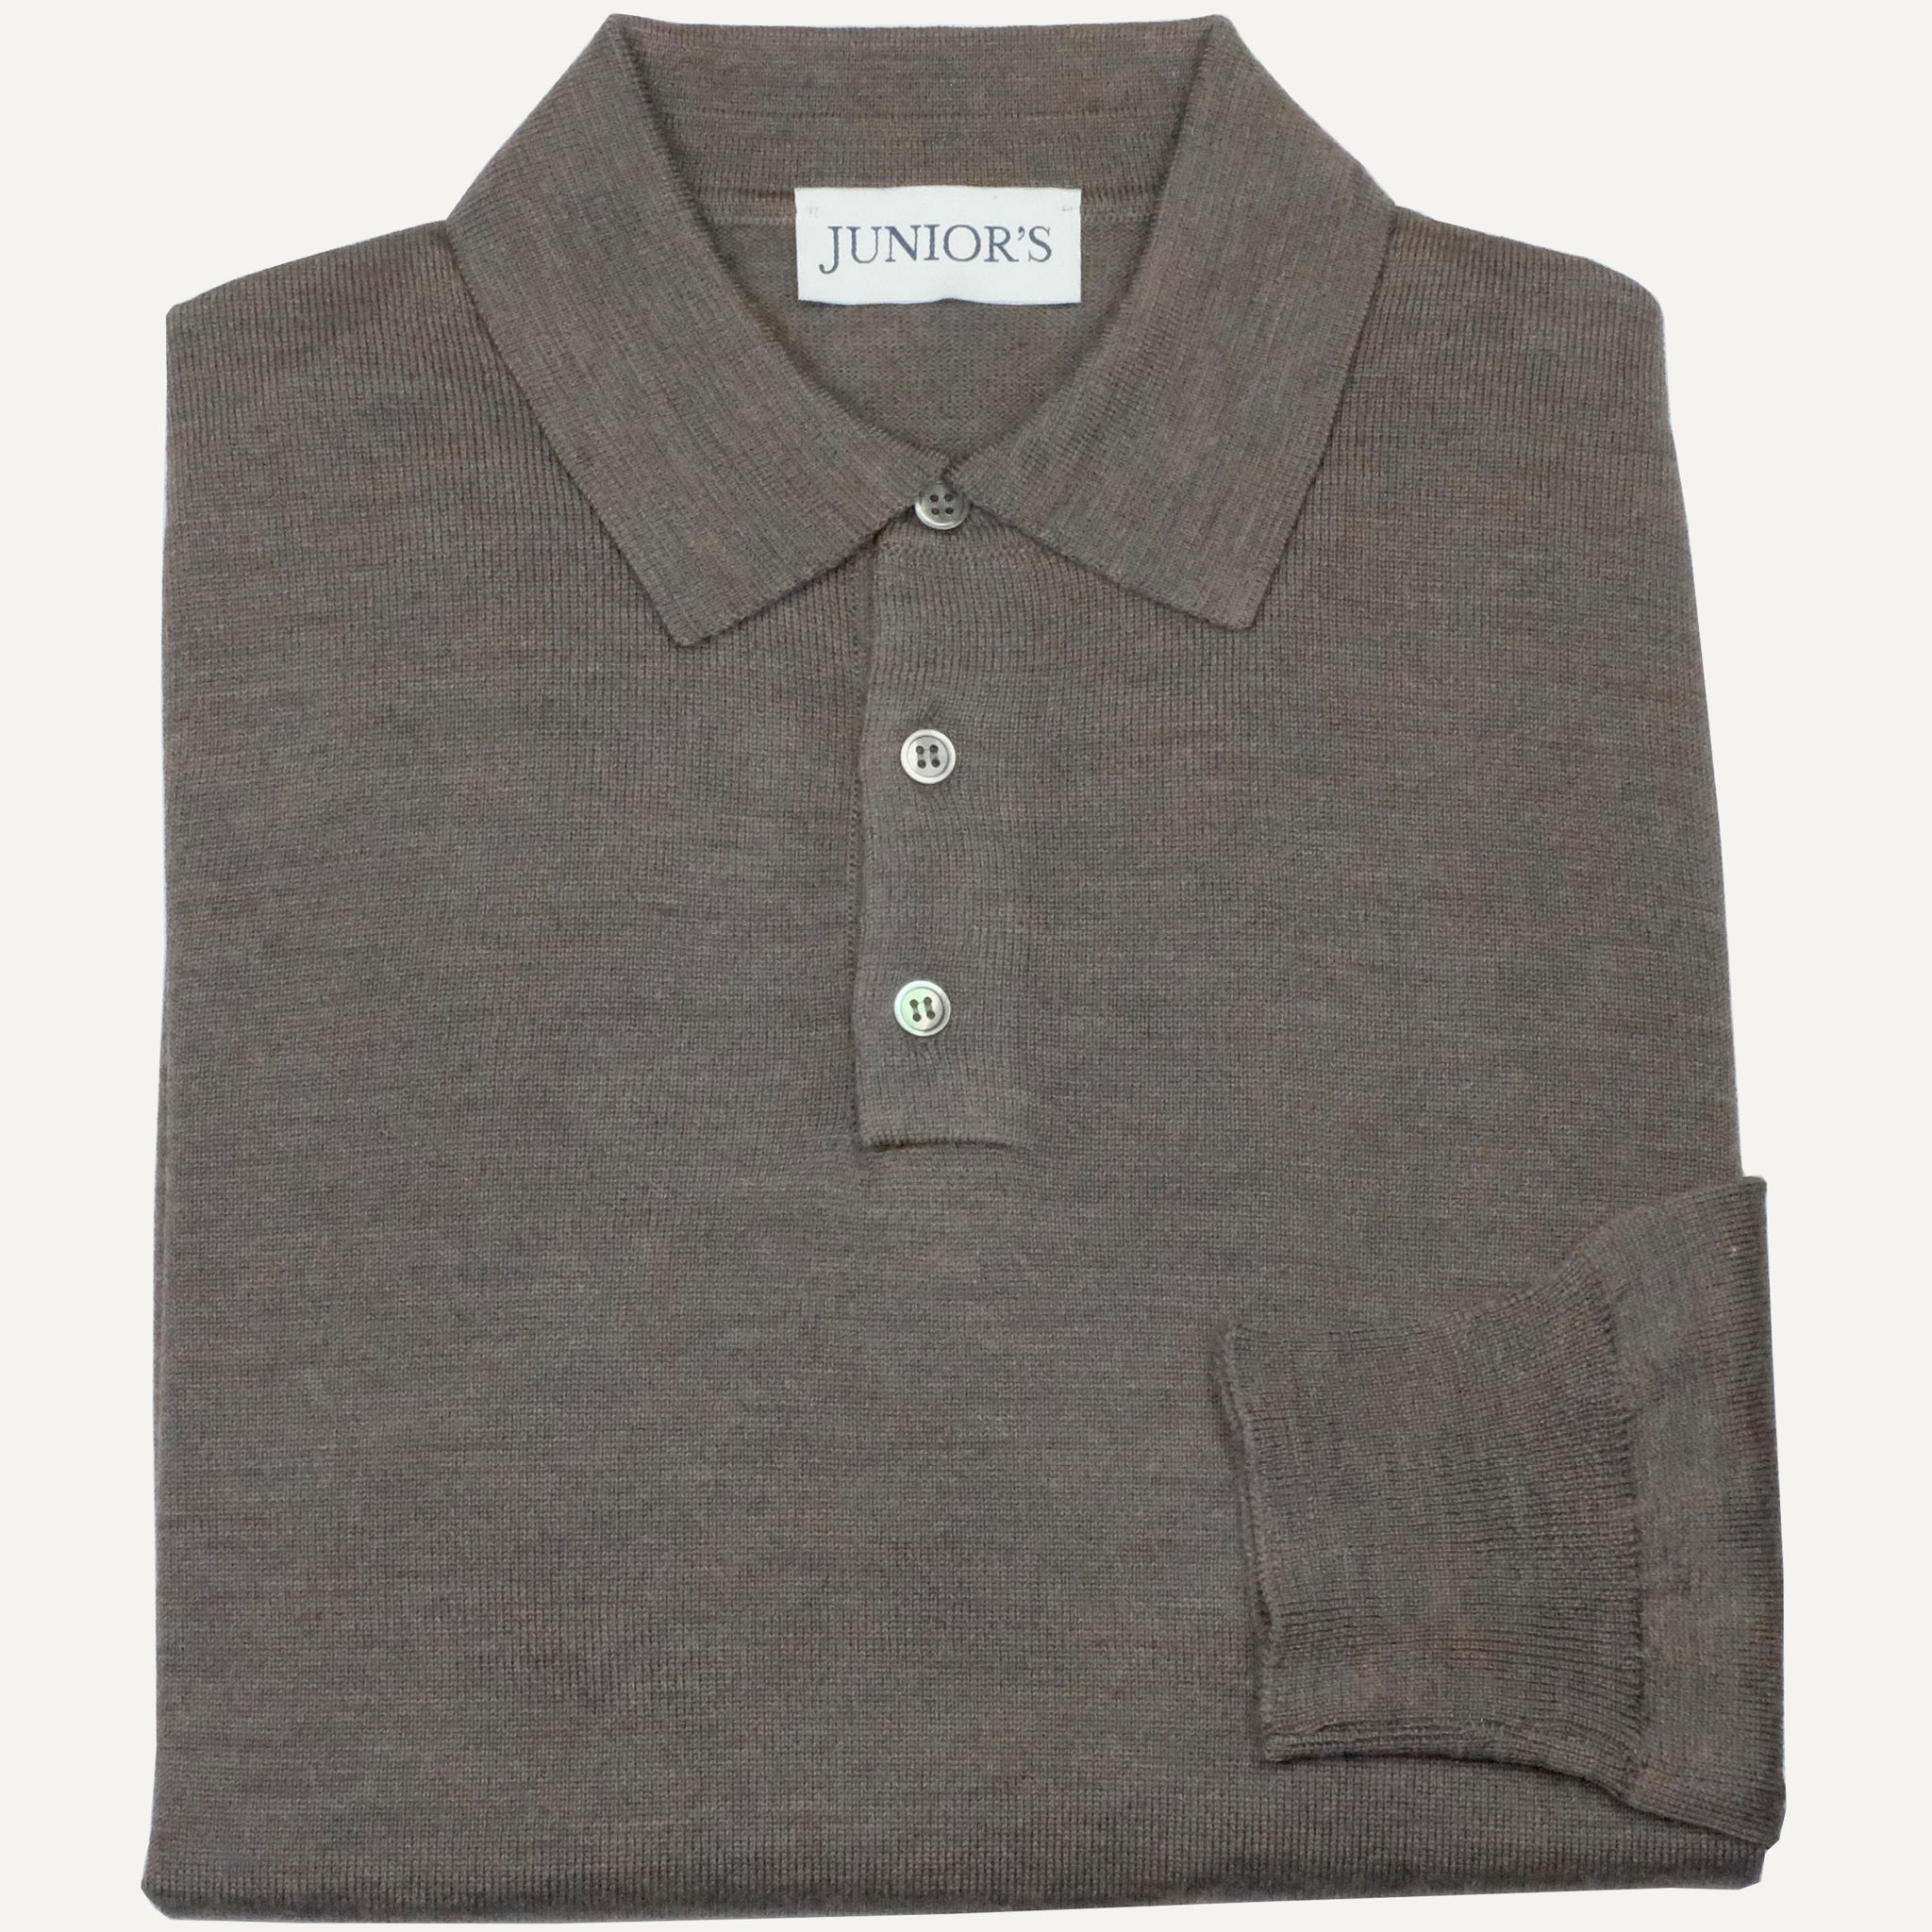 Merino Long Sleeve Polo Shirt